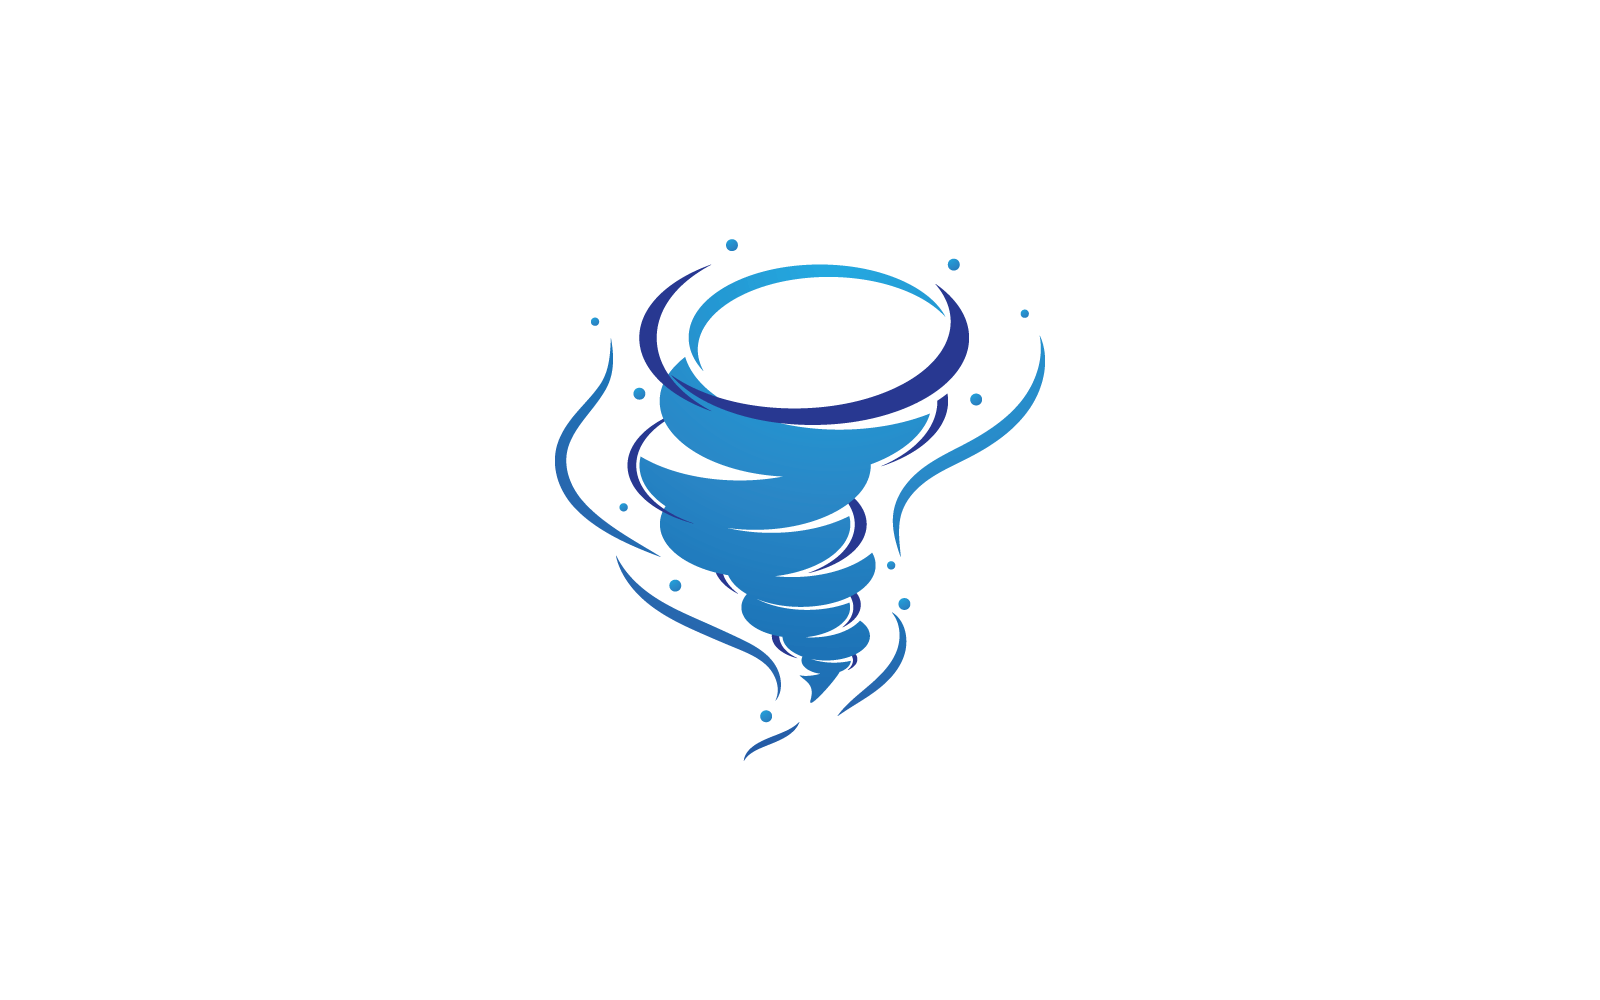 Wind tornado logo vector illustration design template